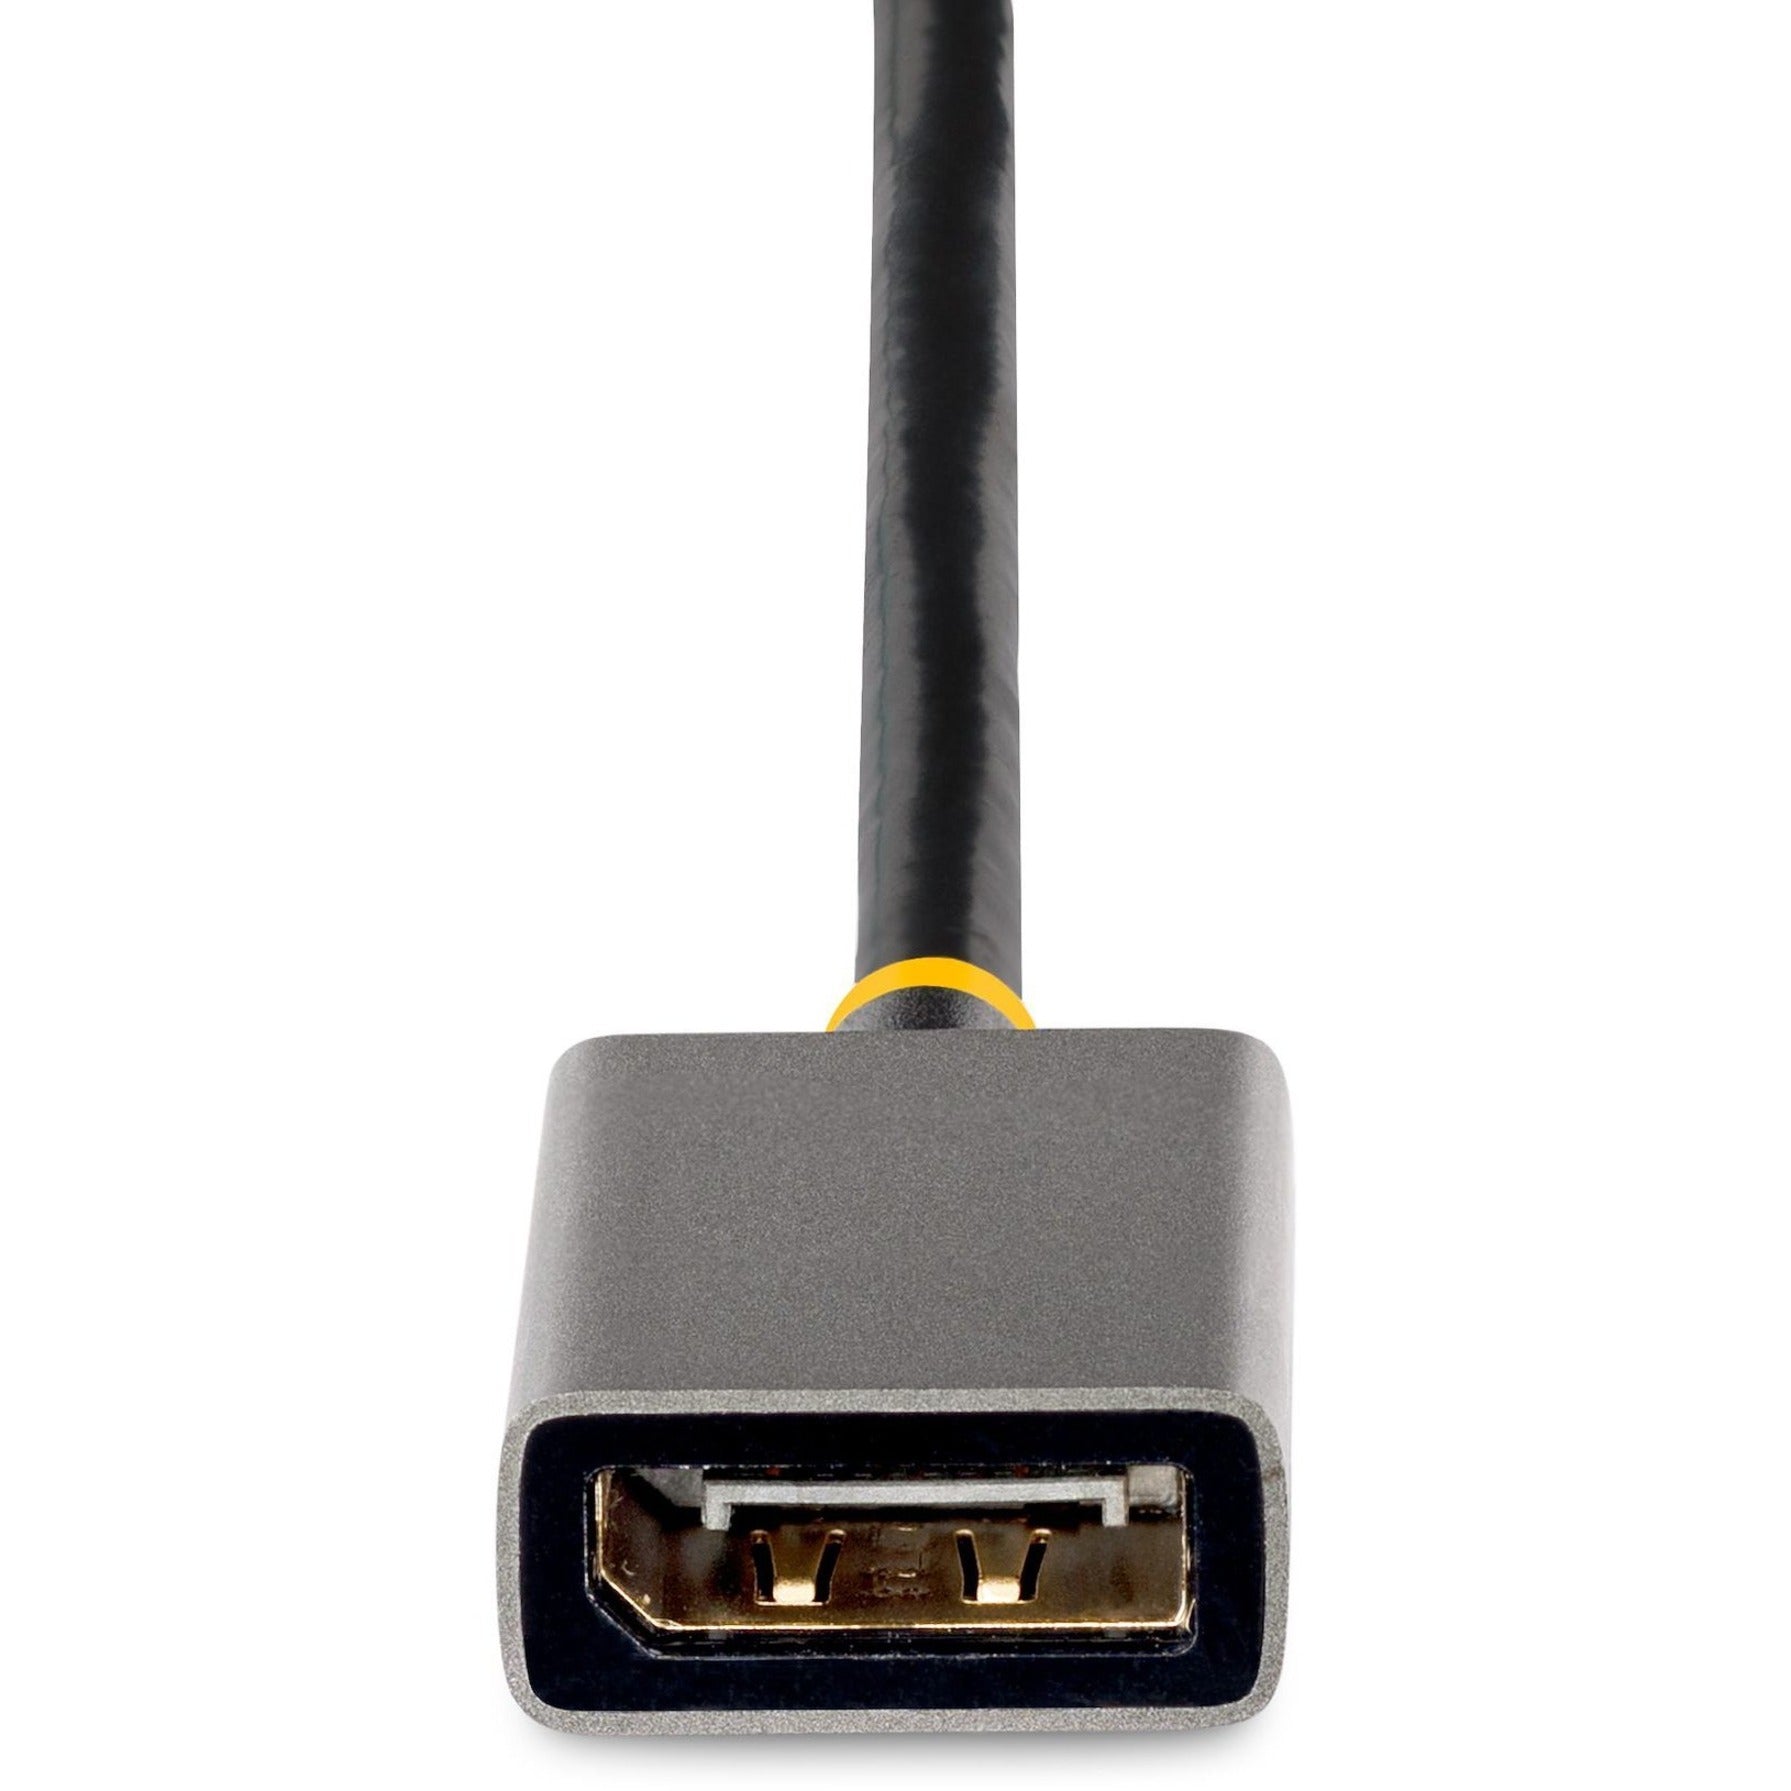 StarTech.com 128-HDMI-DISPLAYPORT HDMI to DisplayPort Adapter, 4K 60Hz HDR USB Powered